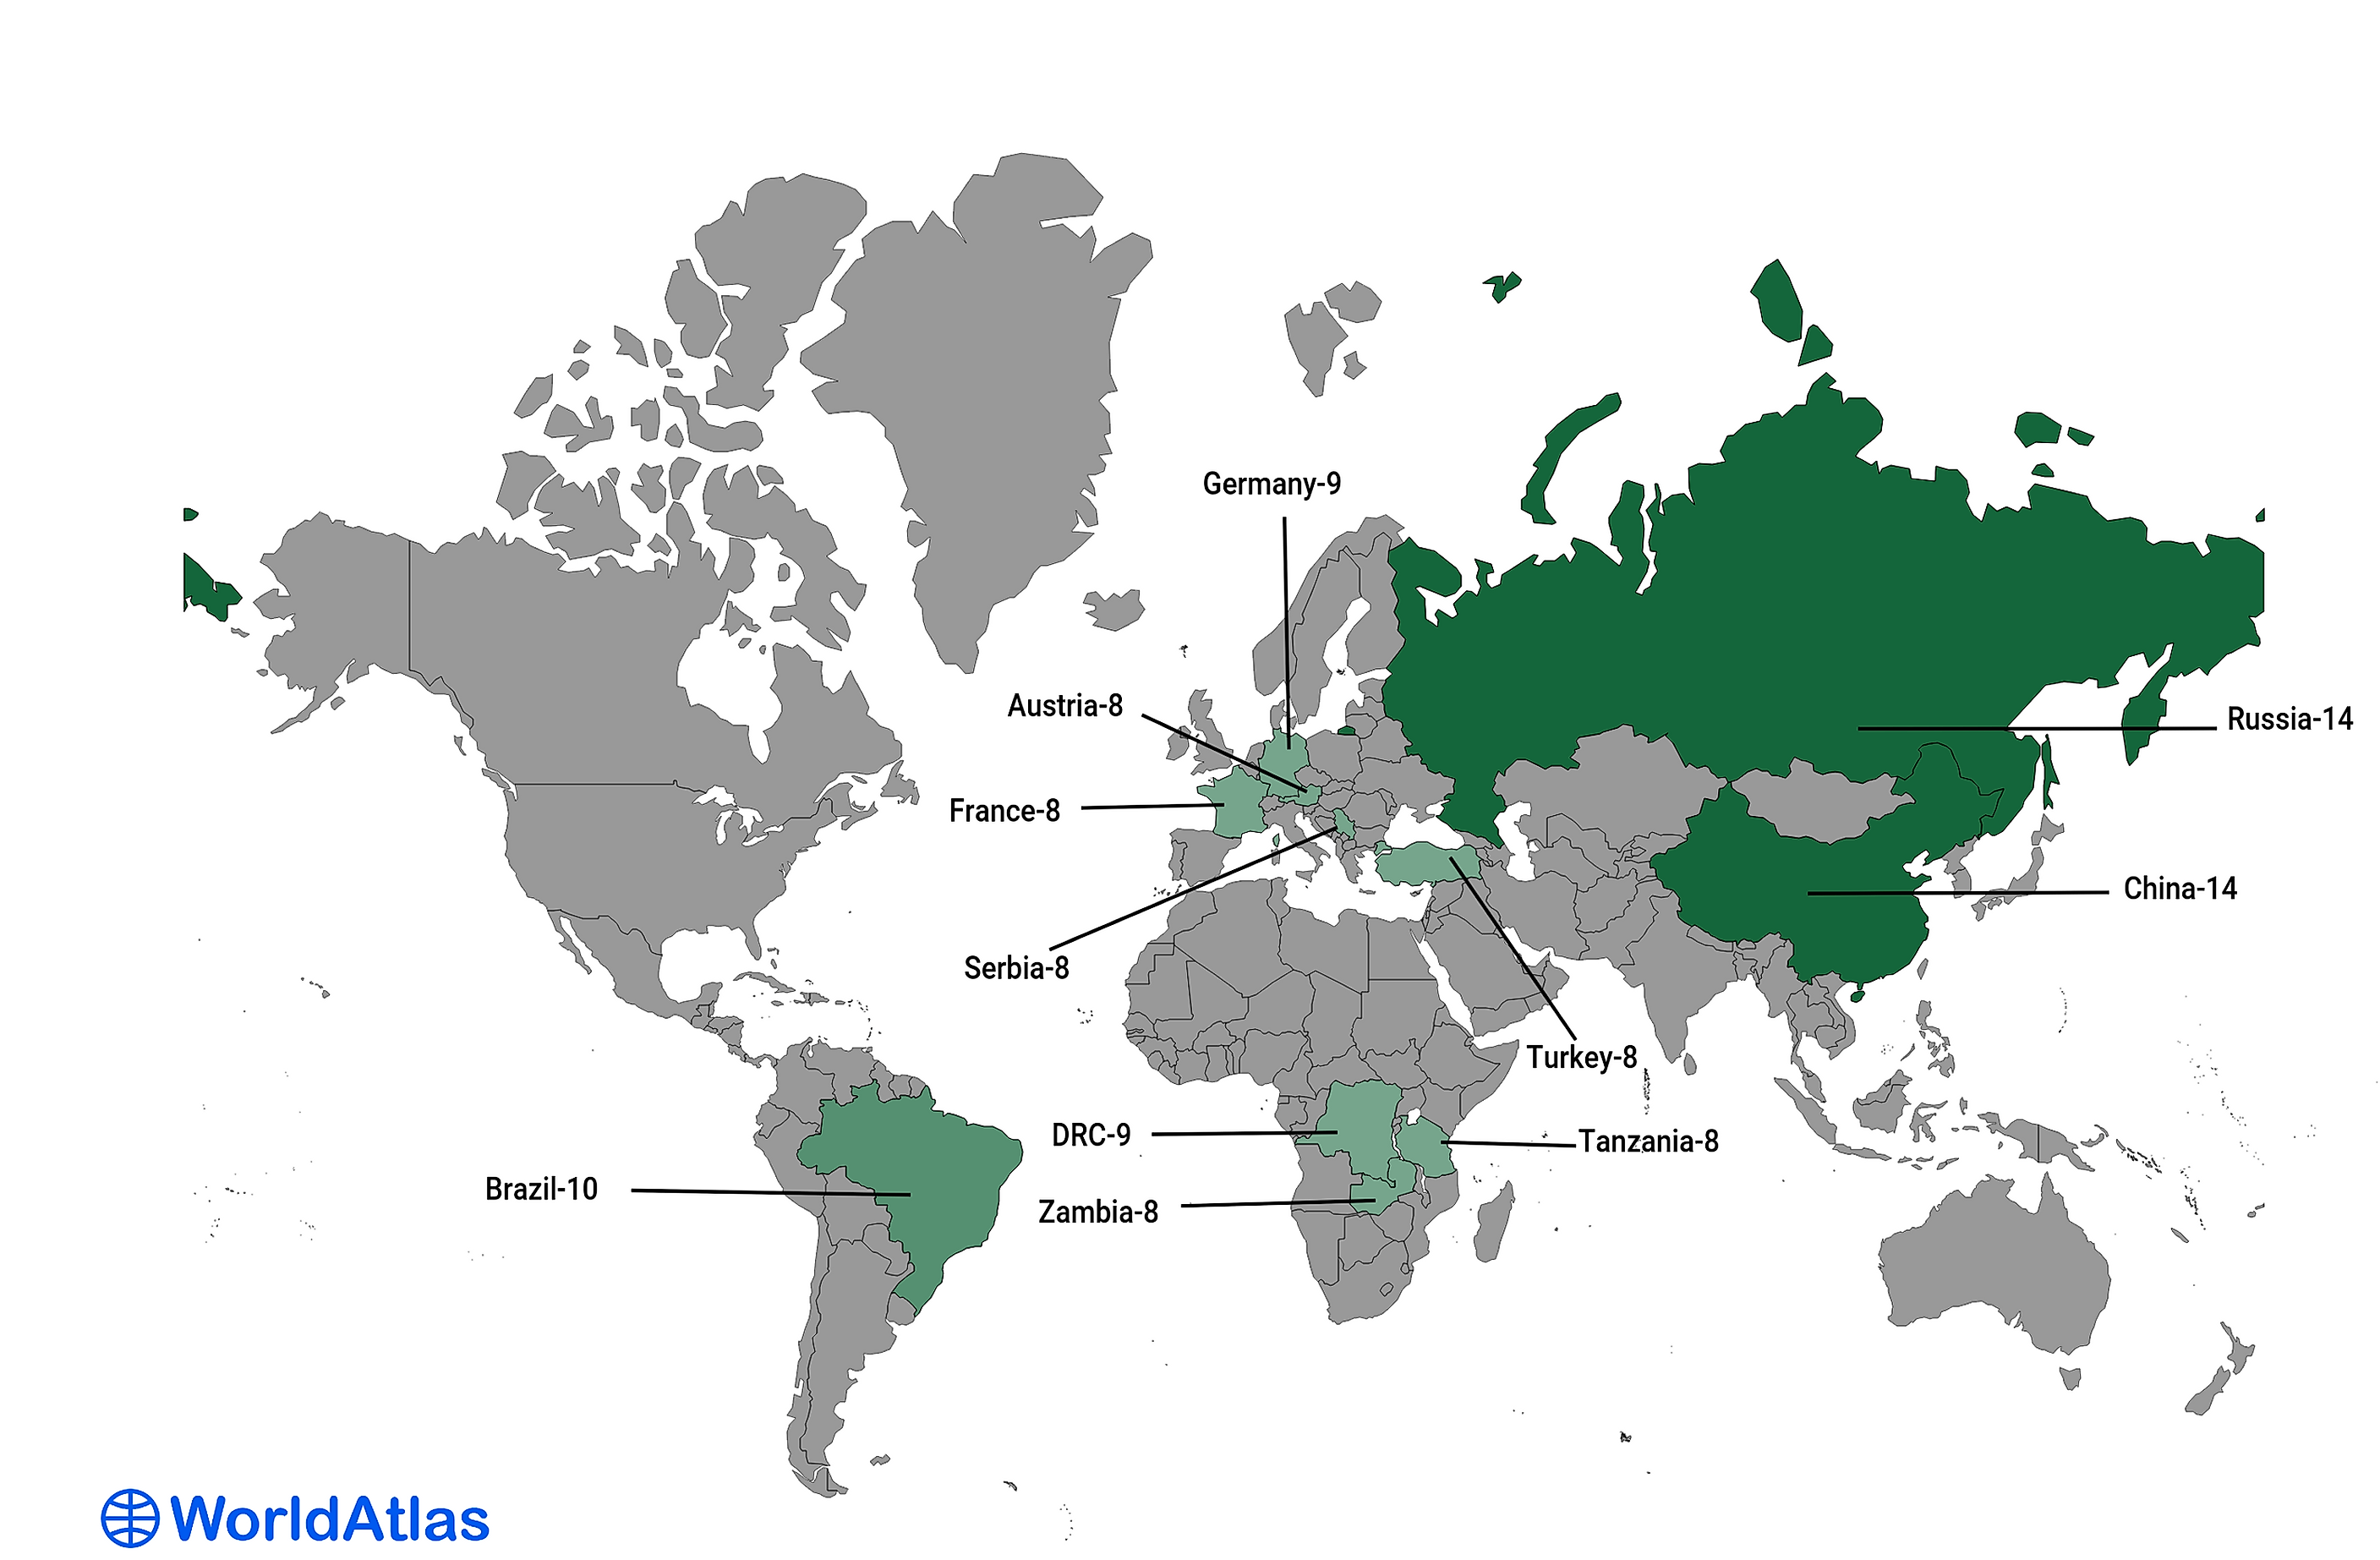 Само густонаселенные страны. 5 Самых густонаселенных стран на карте. Megadiverse Countries. Самые густонаселенные страны.